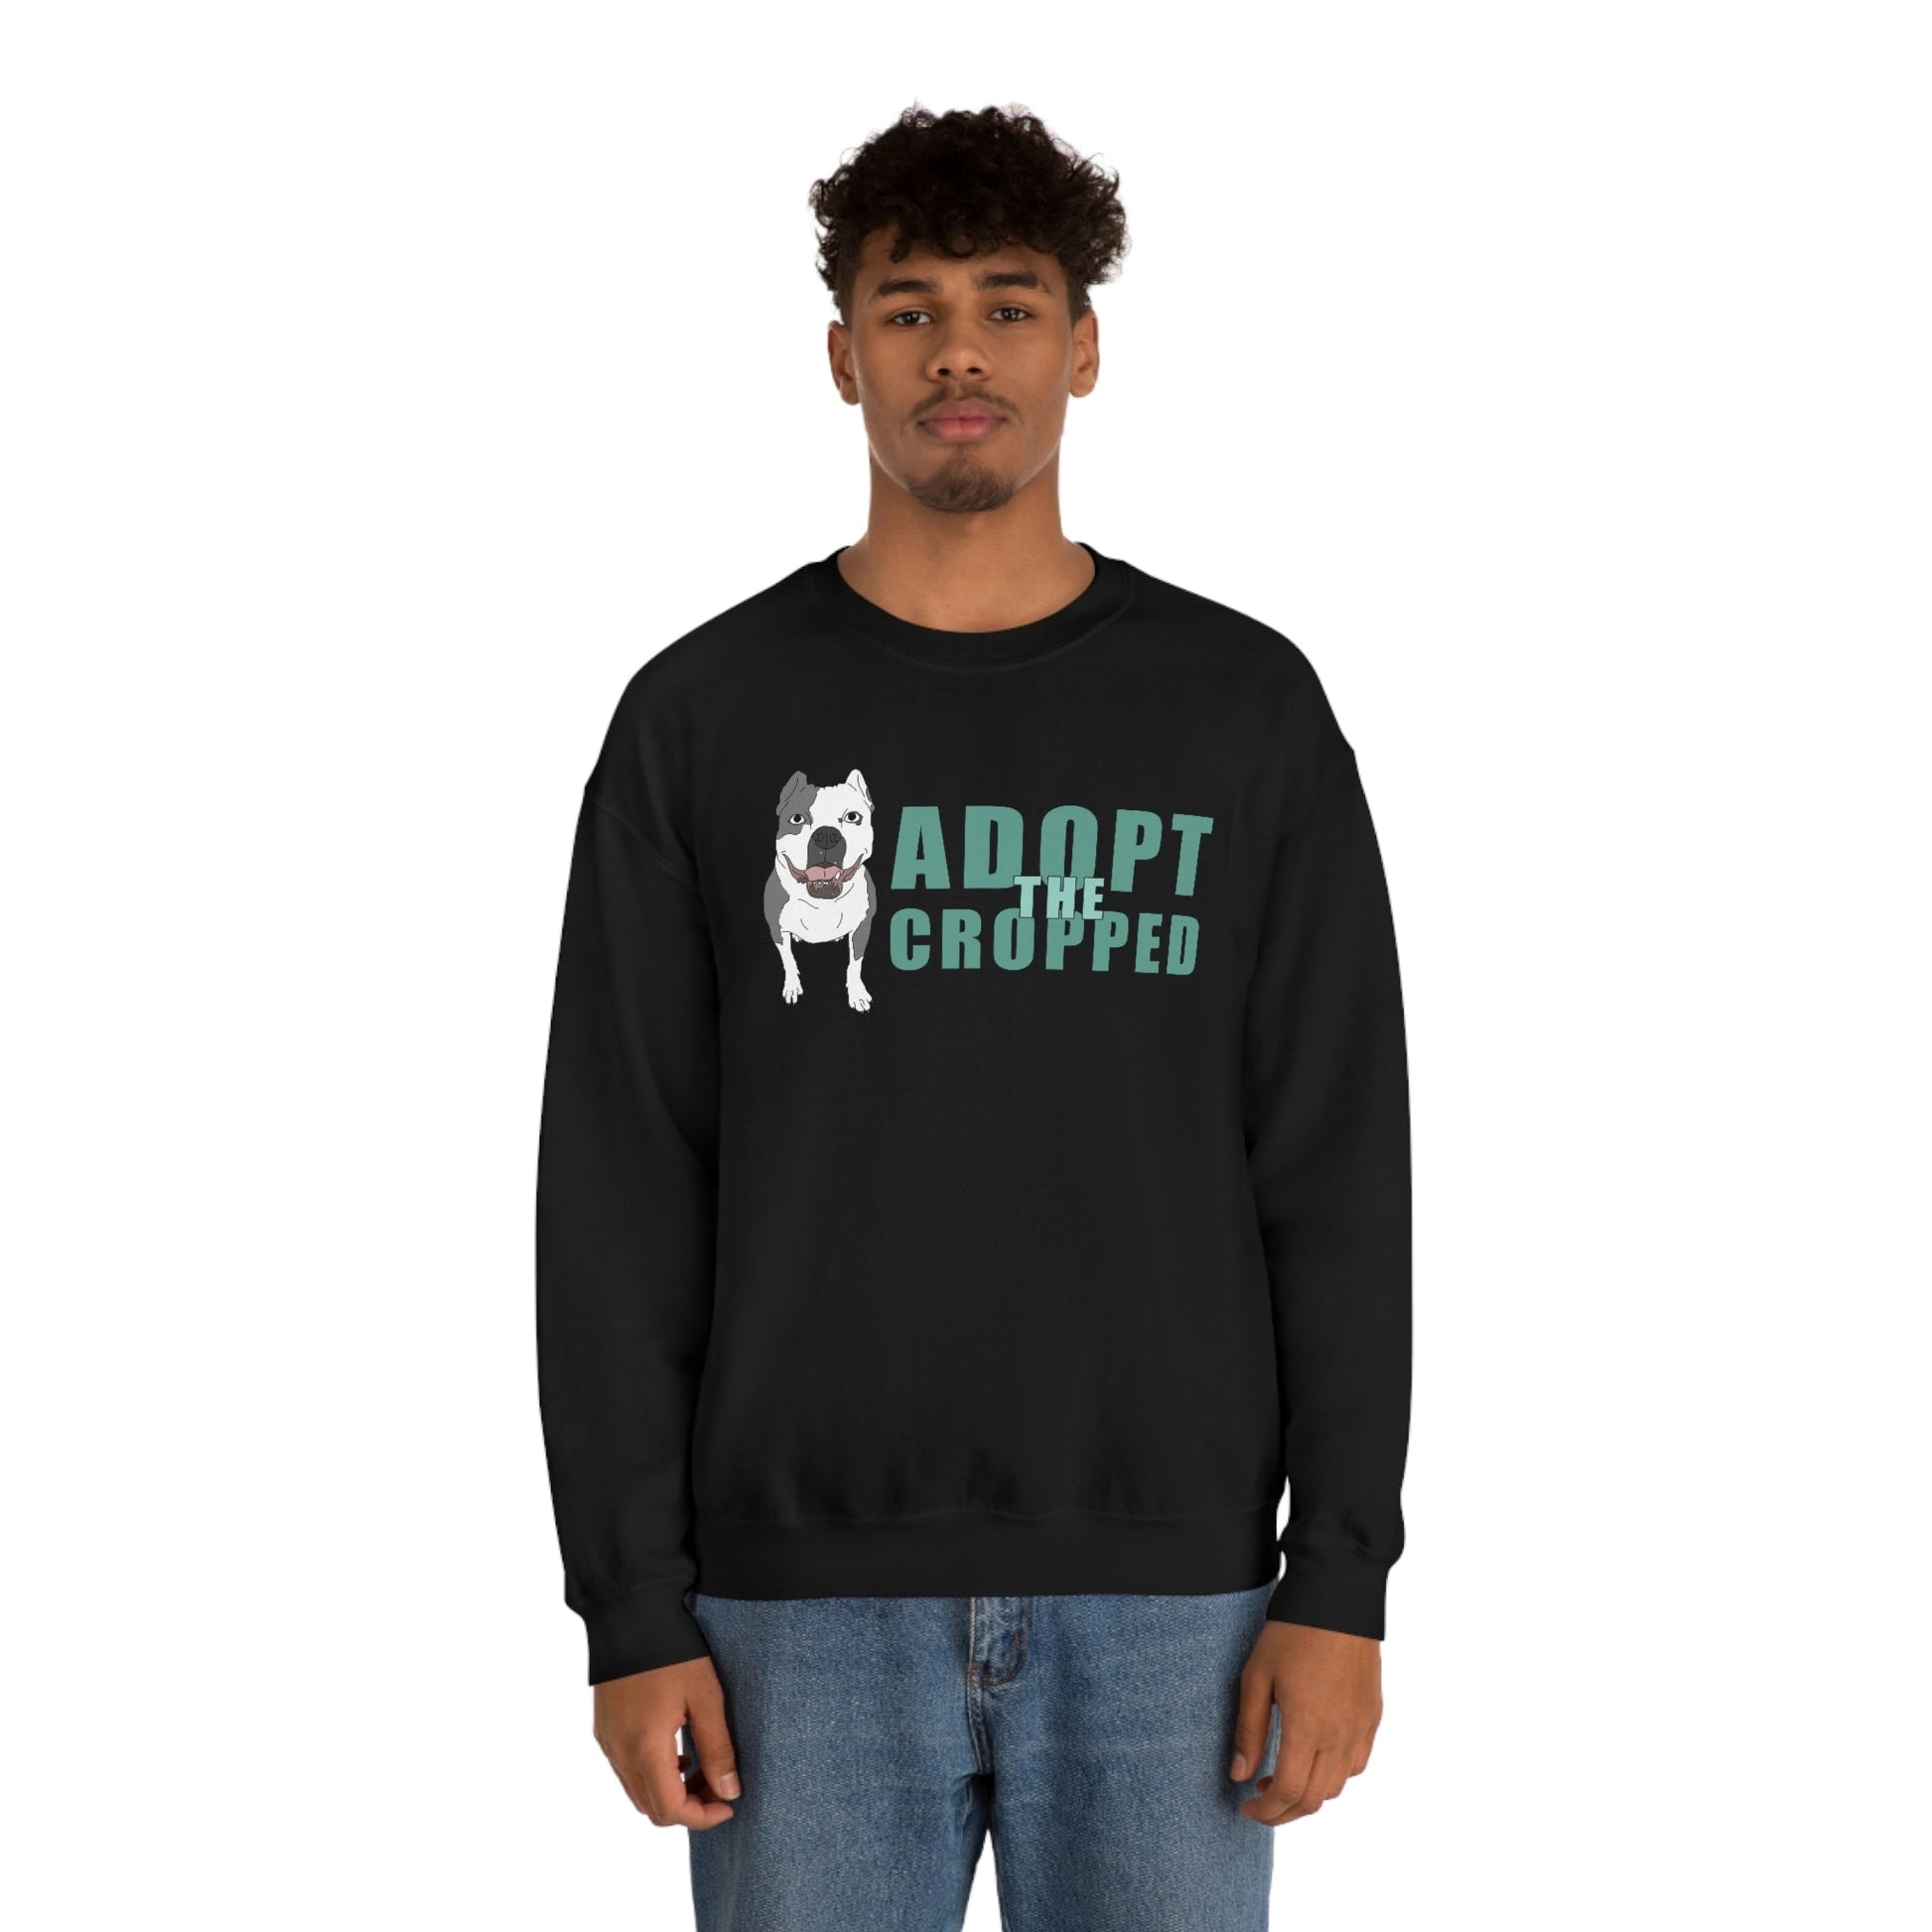 Adopt The Cropped | Crewneck Sweatshirt - Detezi Designs-30973066805009892461